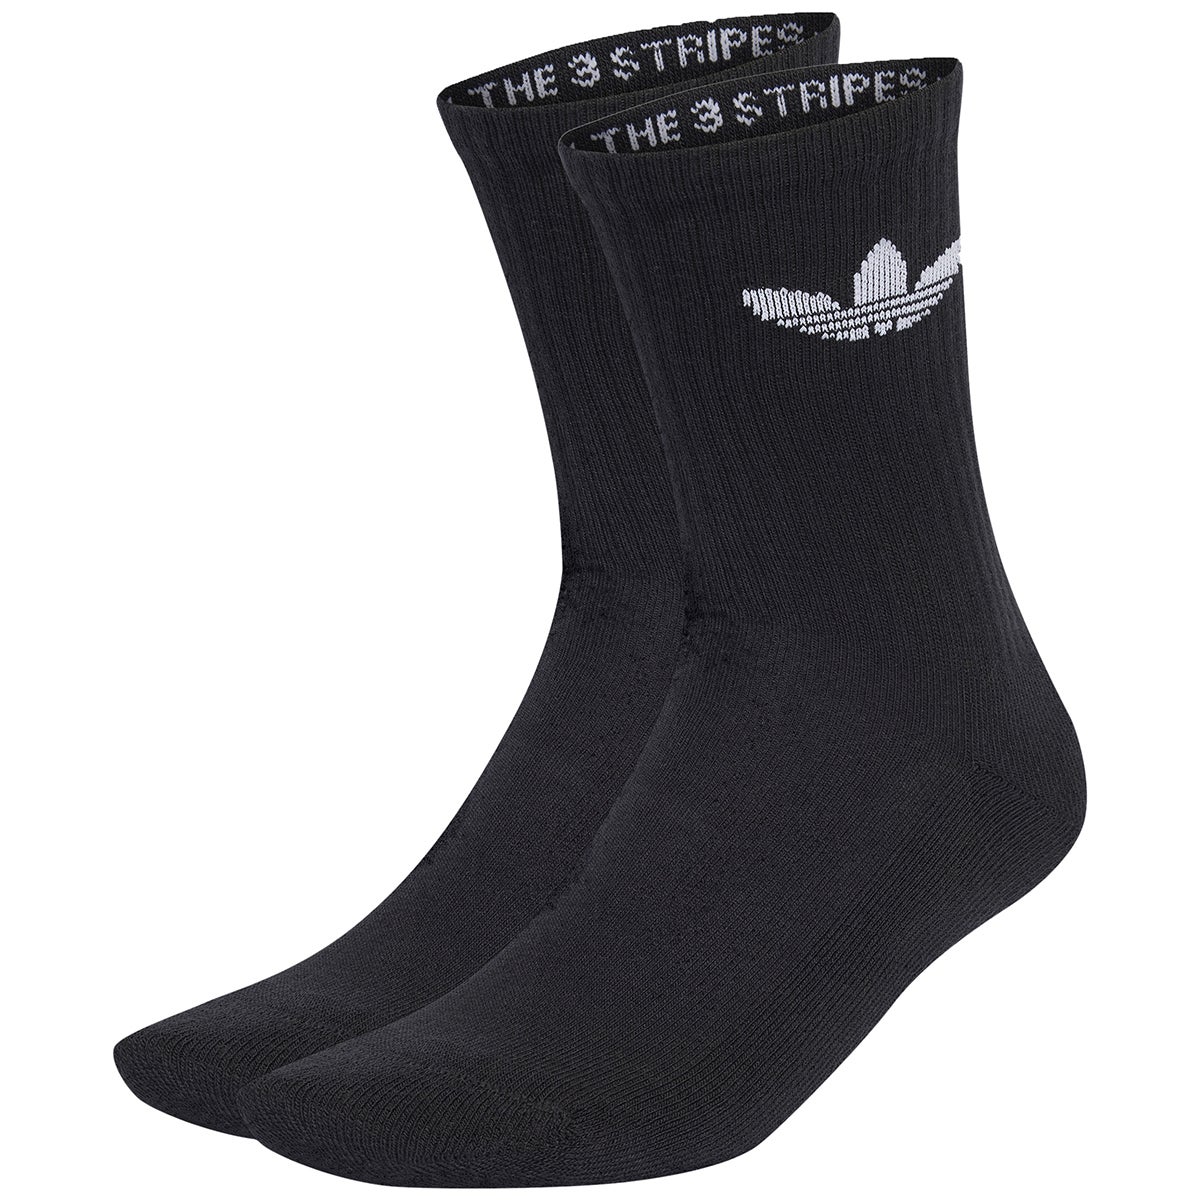 Adidas Trefoil Cushion Crew Sock 3 Pack in Black | Boardertown